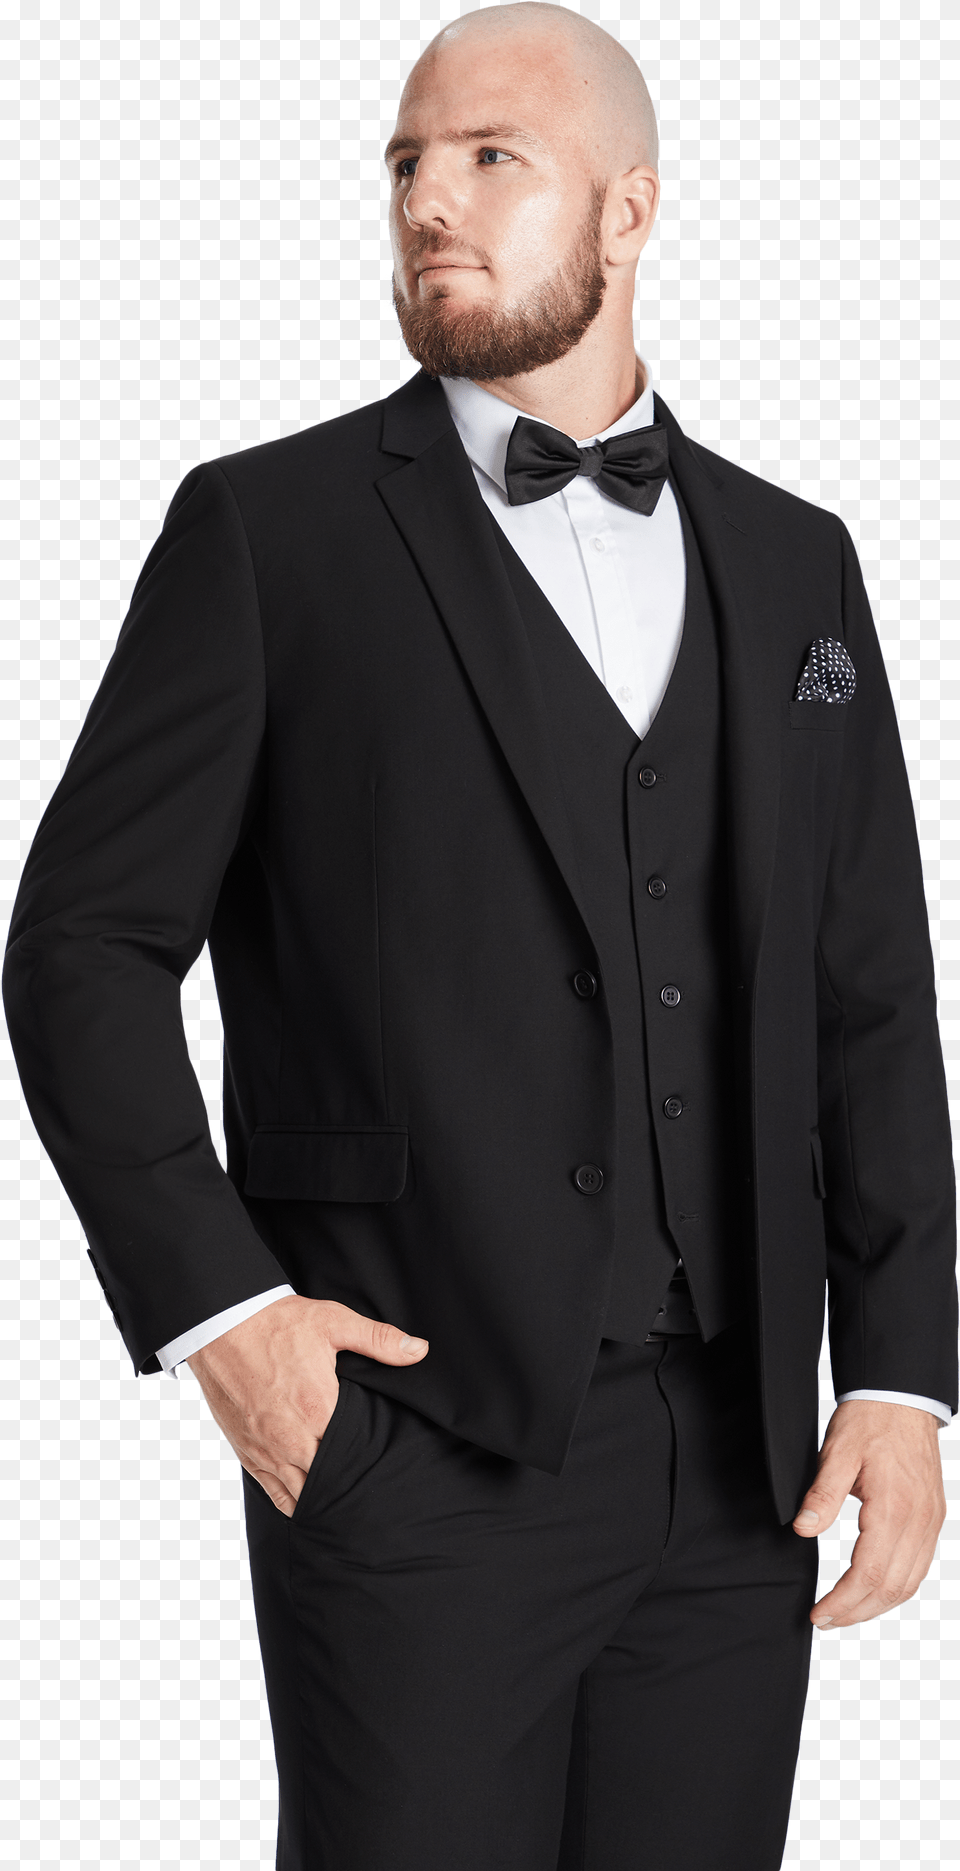 Jacket, Tuxedo, Suit, Clothing, Formal Wear Png Image